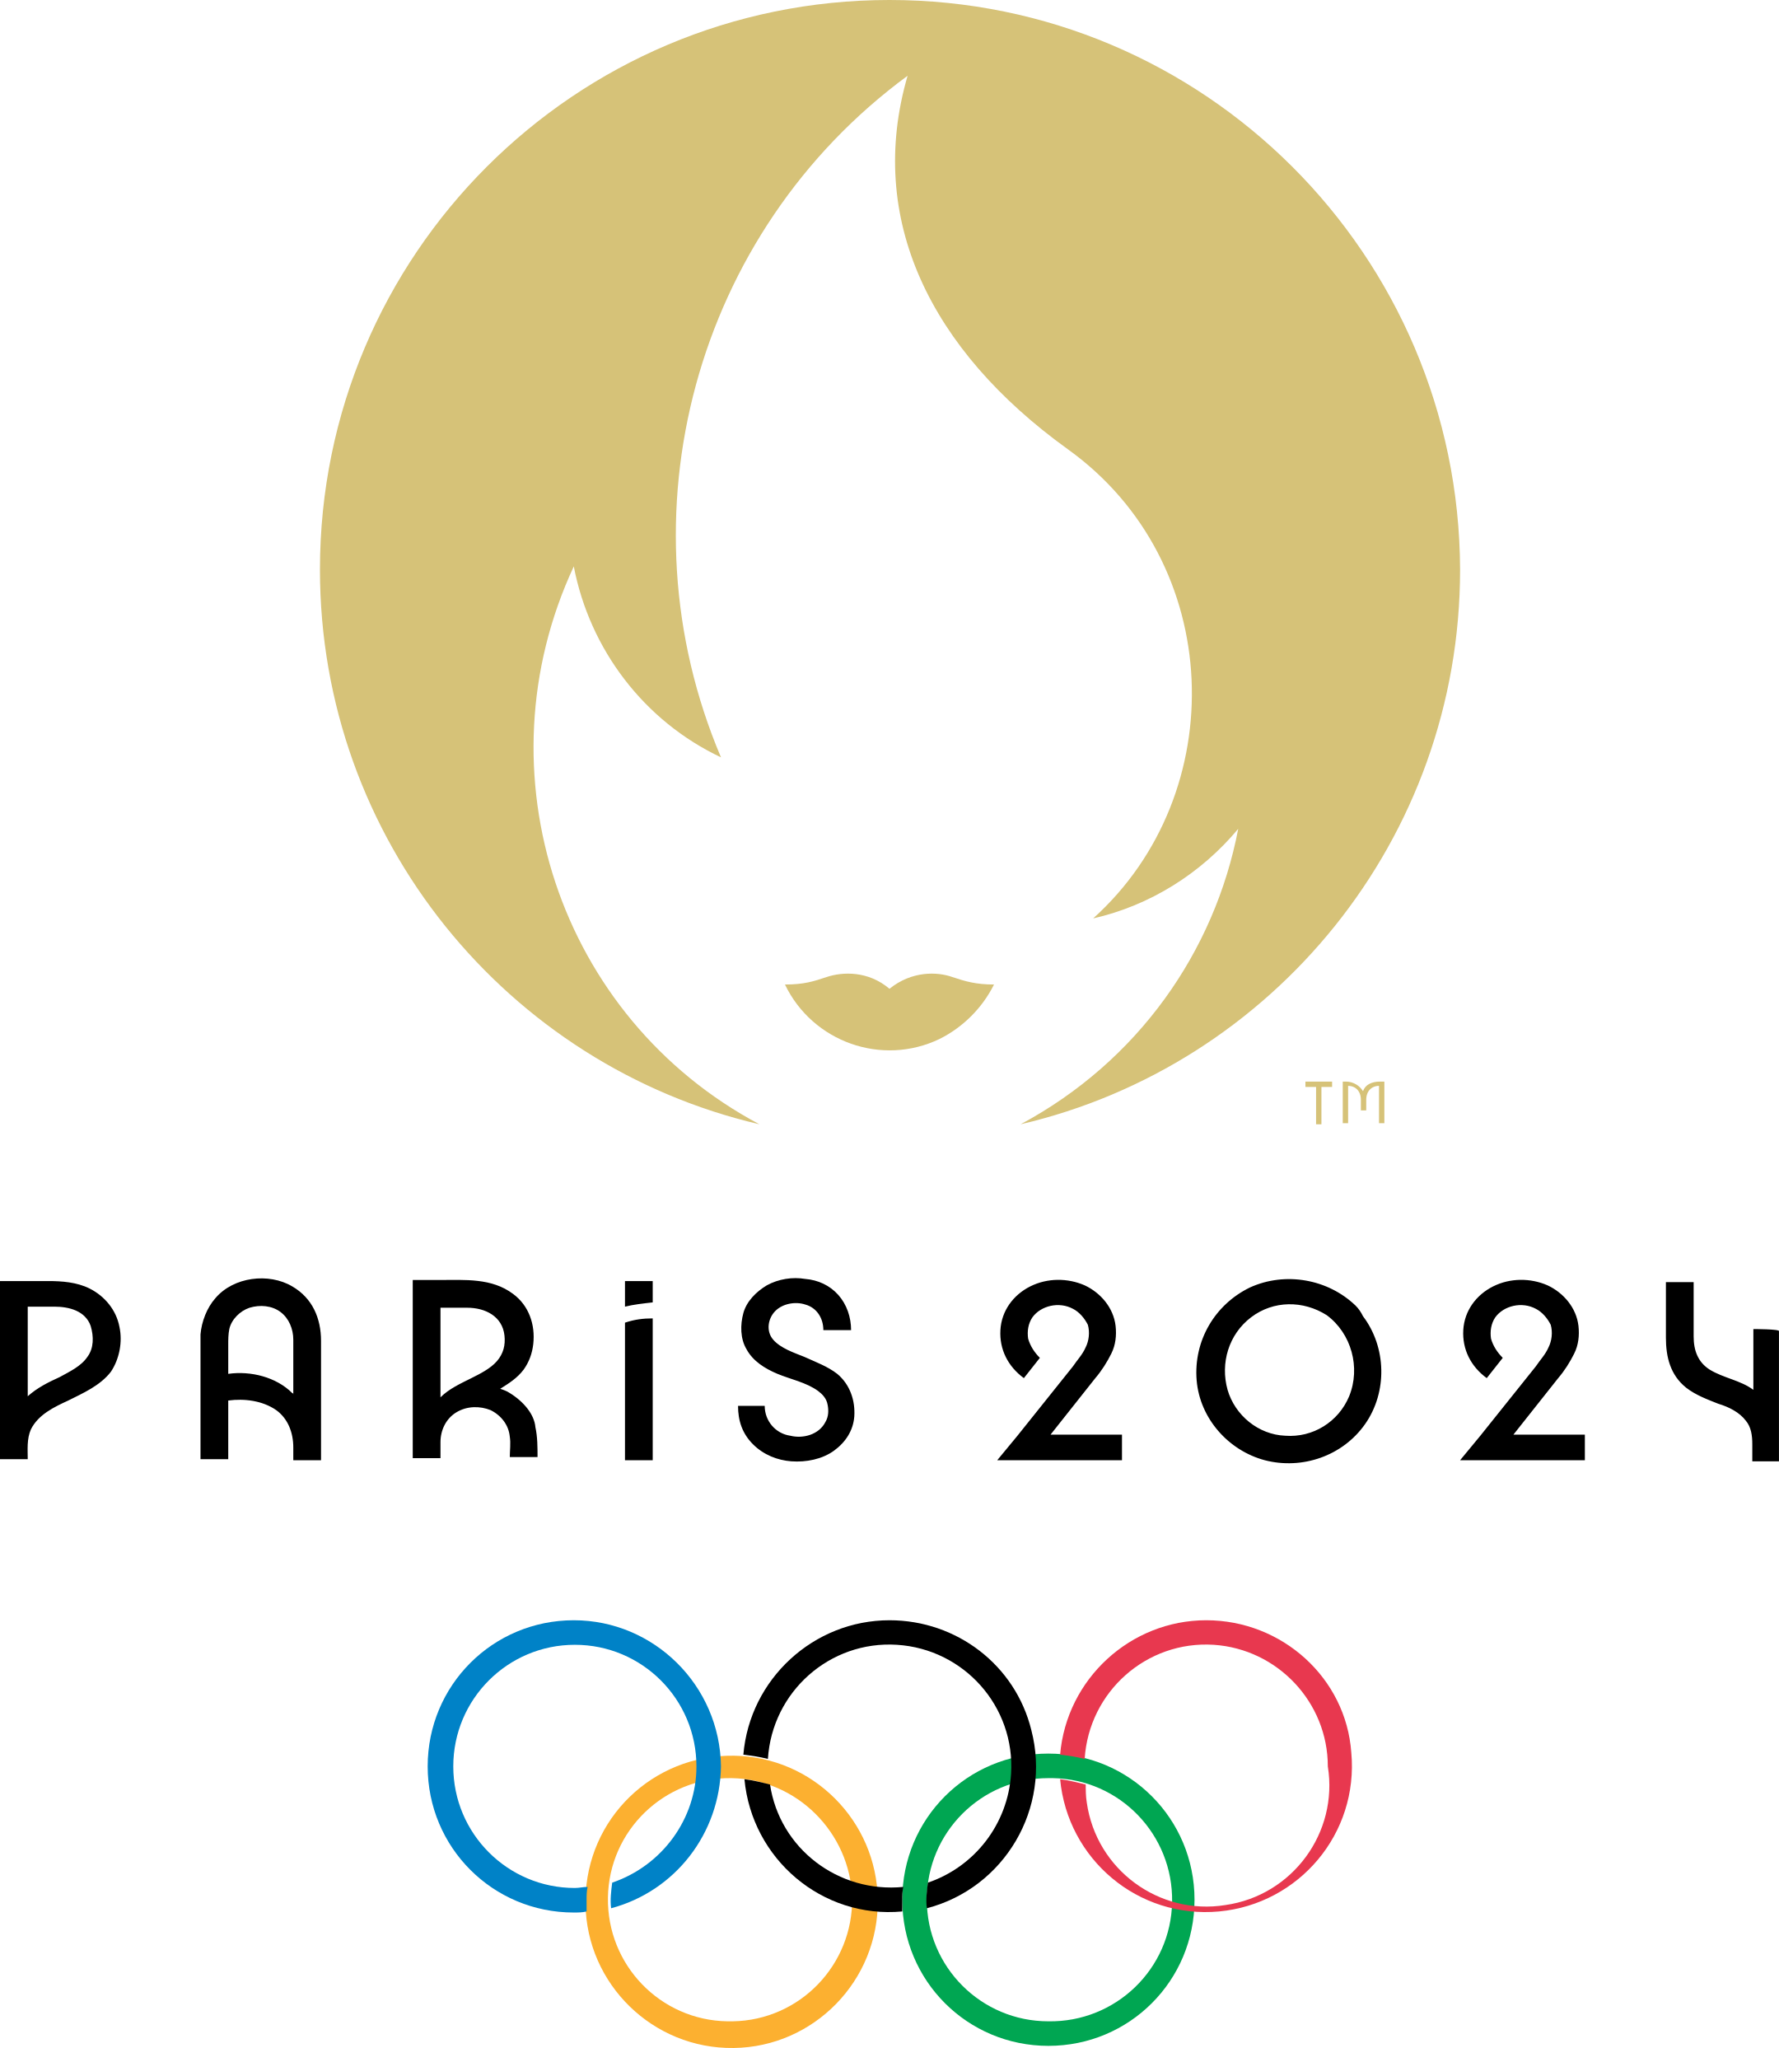 Paris 2024 / Logo for Paris 2024 Olympics, Paralympics honors French